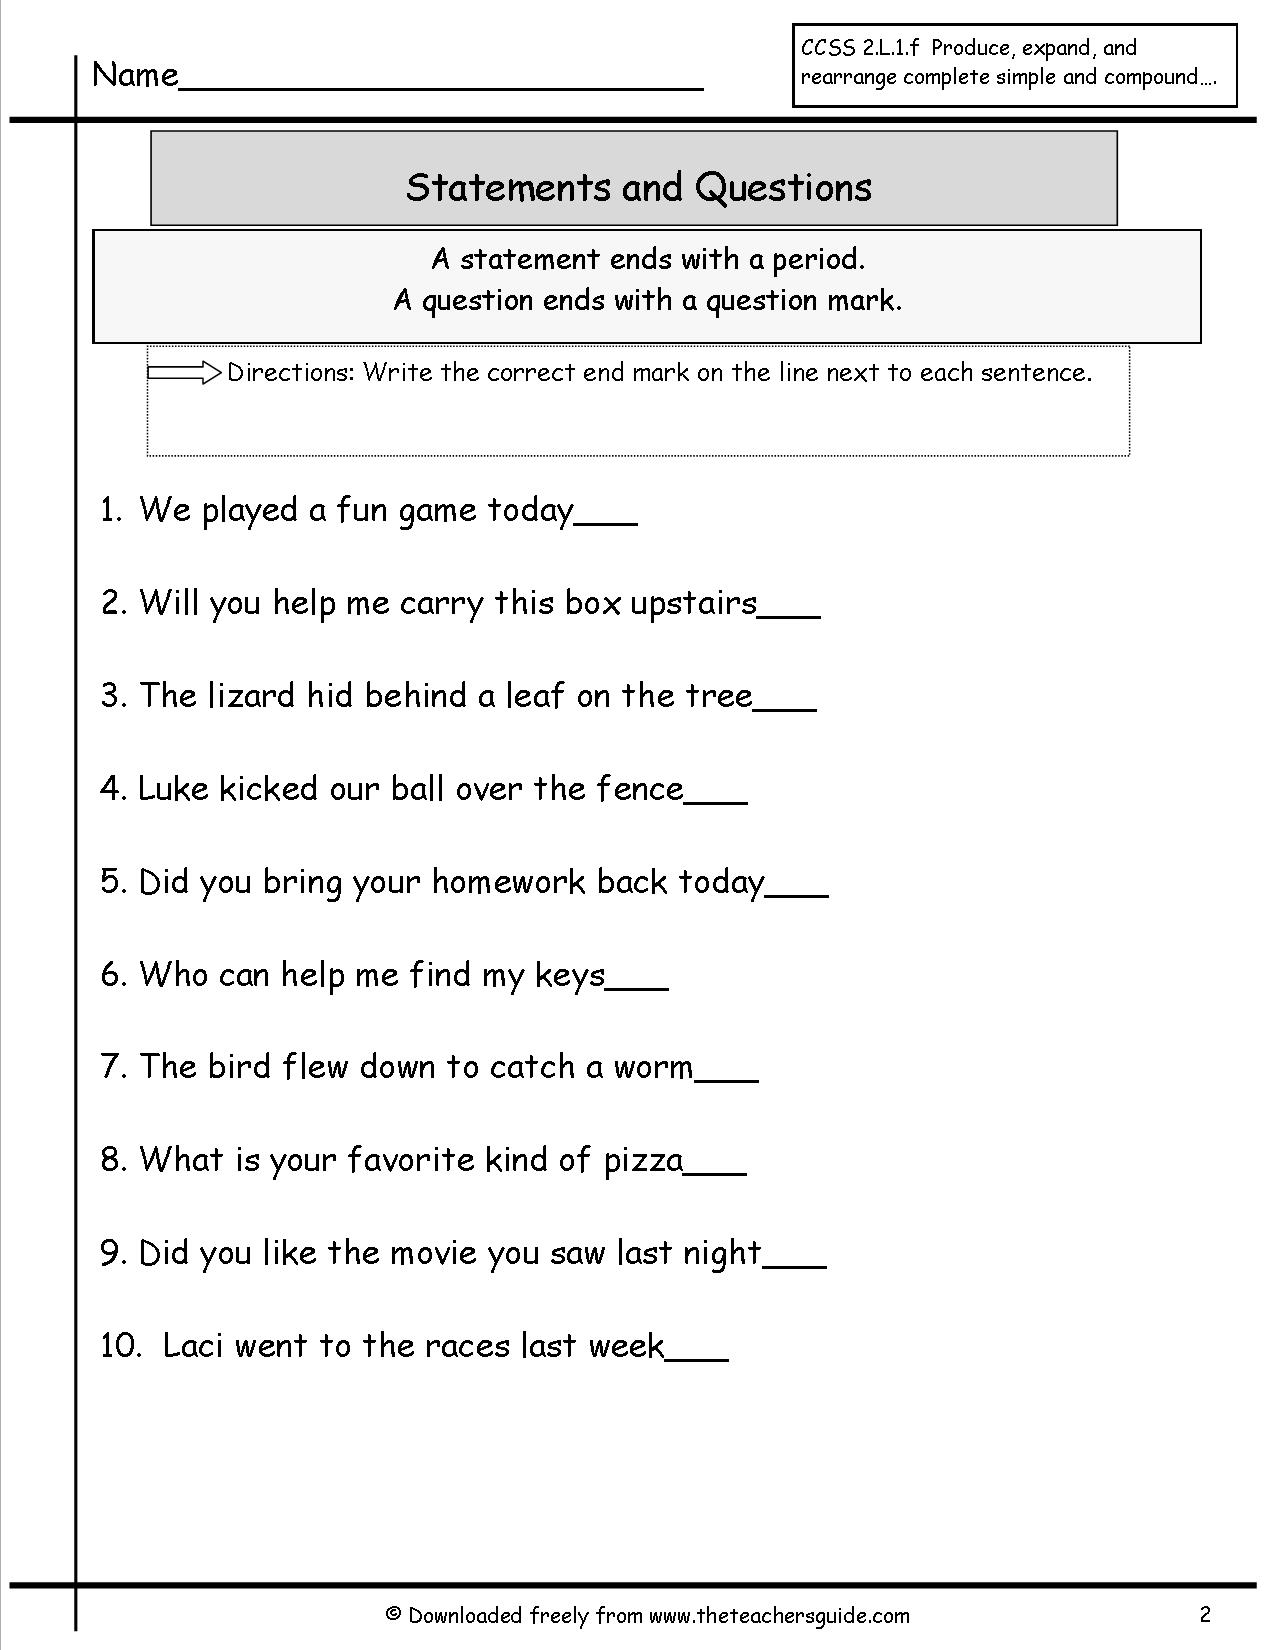 Statement or Question Sentences Worksheet Image